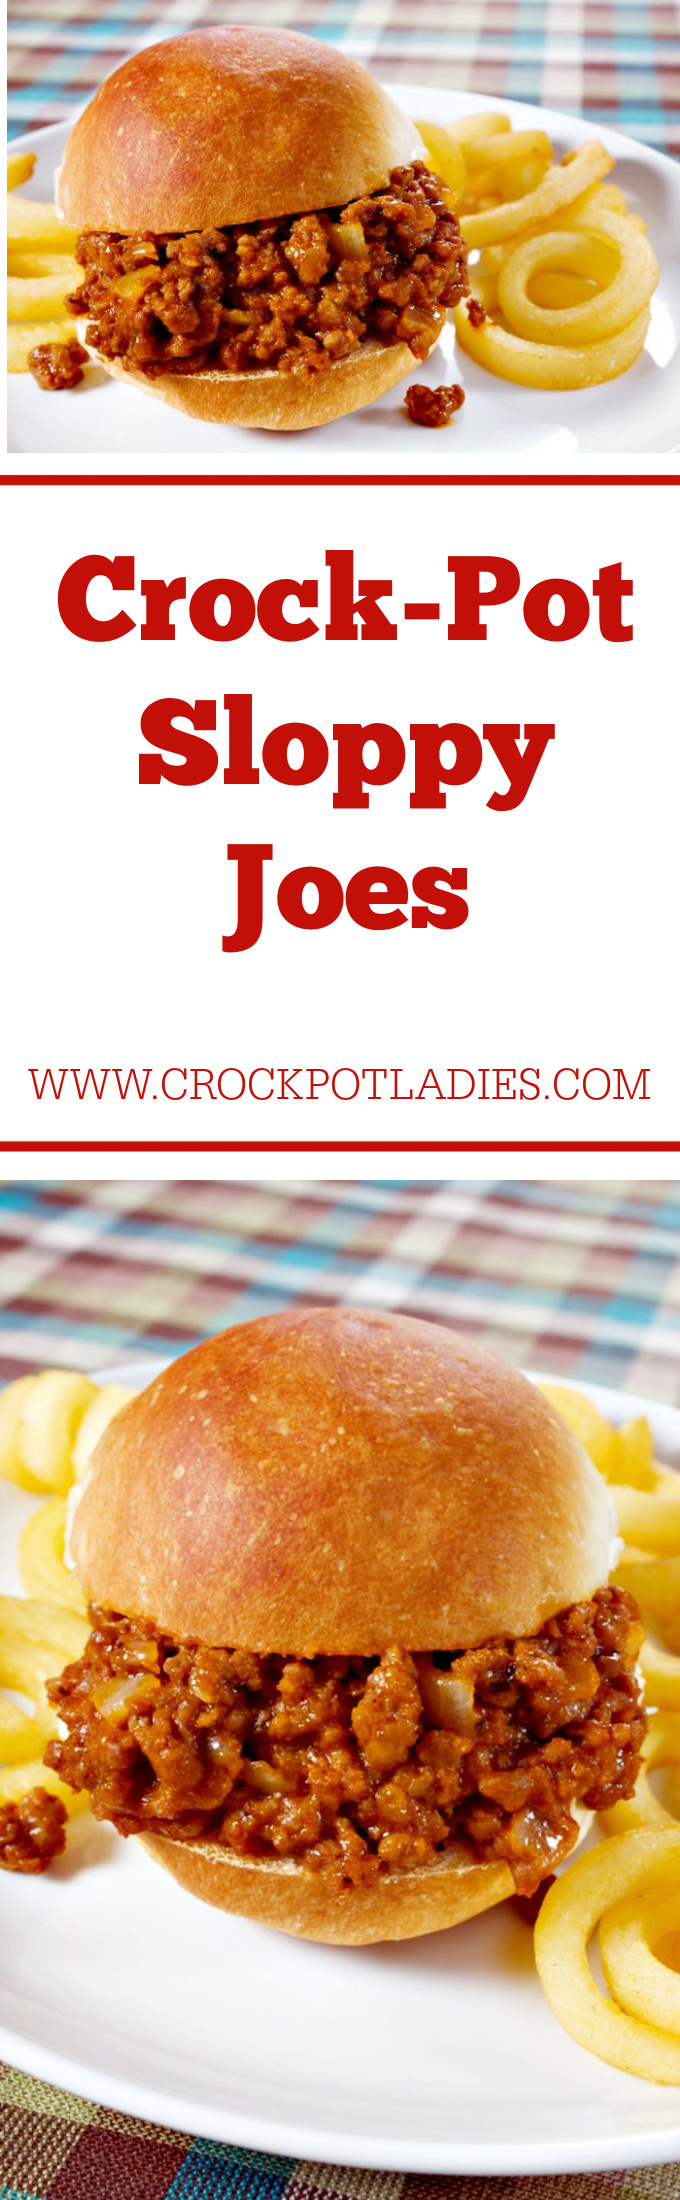 Crock-Pot Sloppy Joes